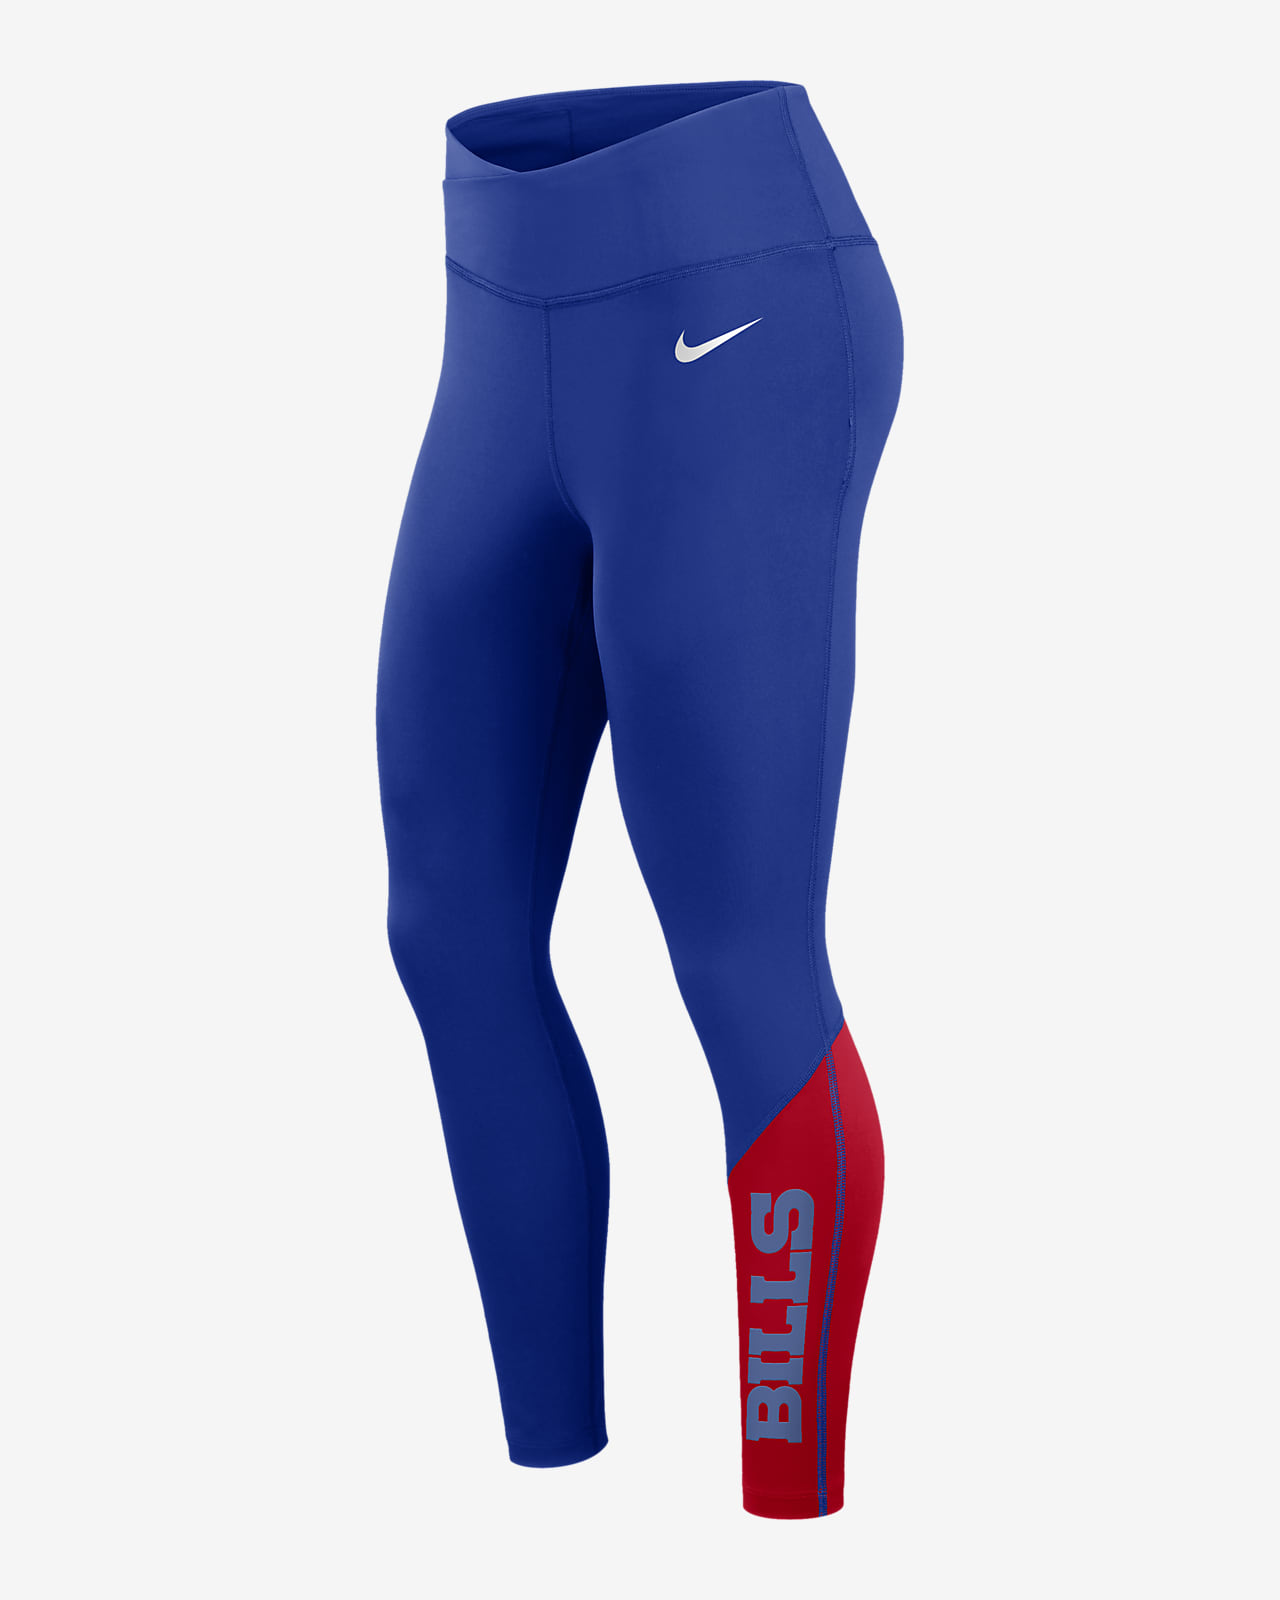 Nike Dri-FIT (NFL Buffalo Bills) Women's 7/8 Leggings.